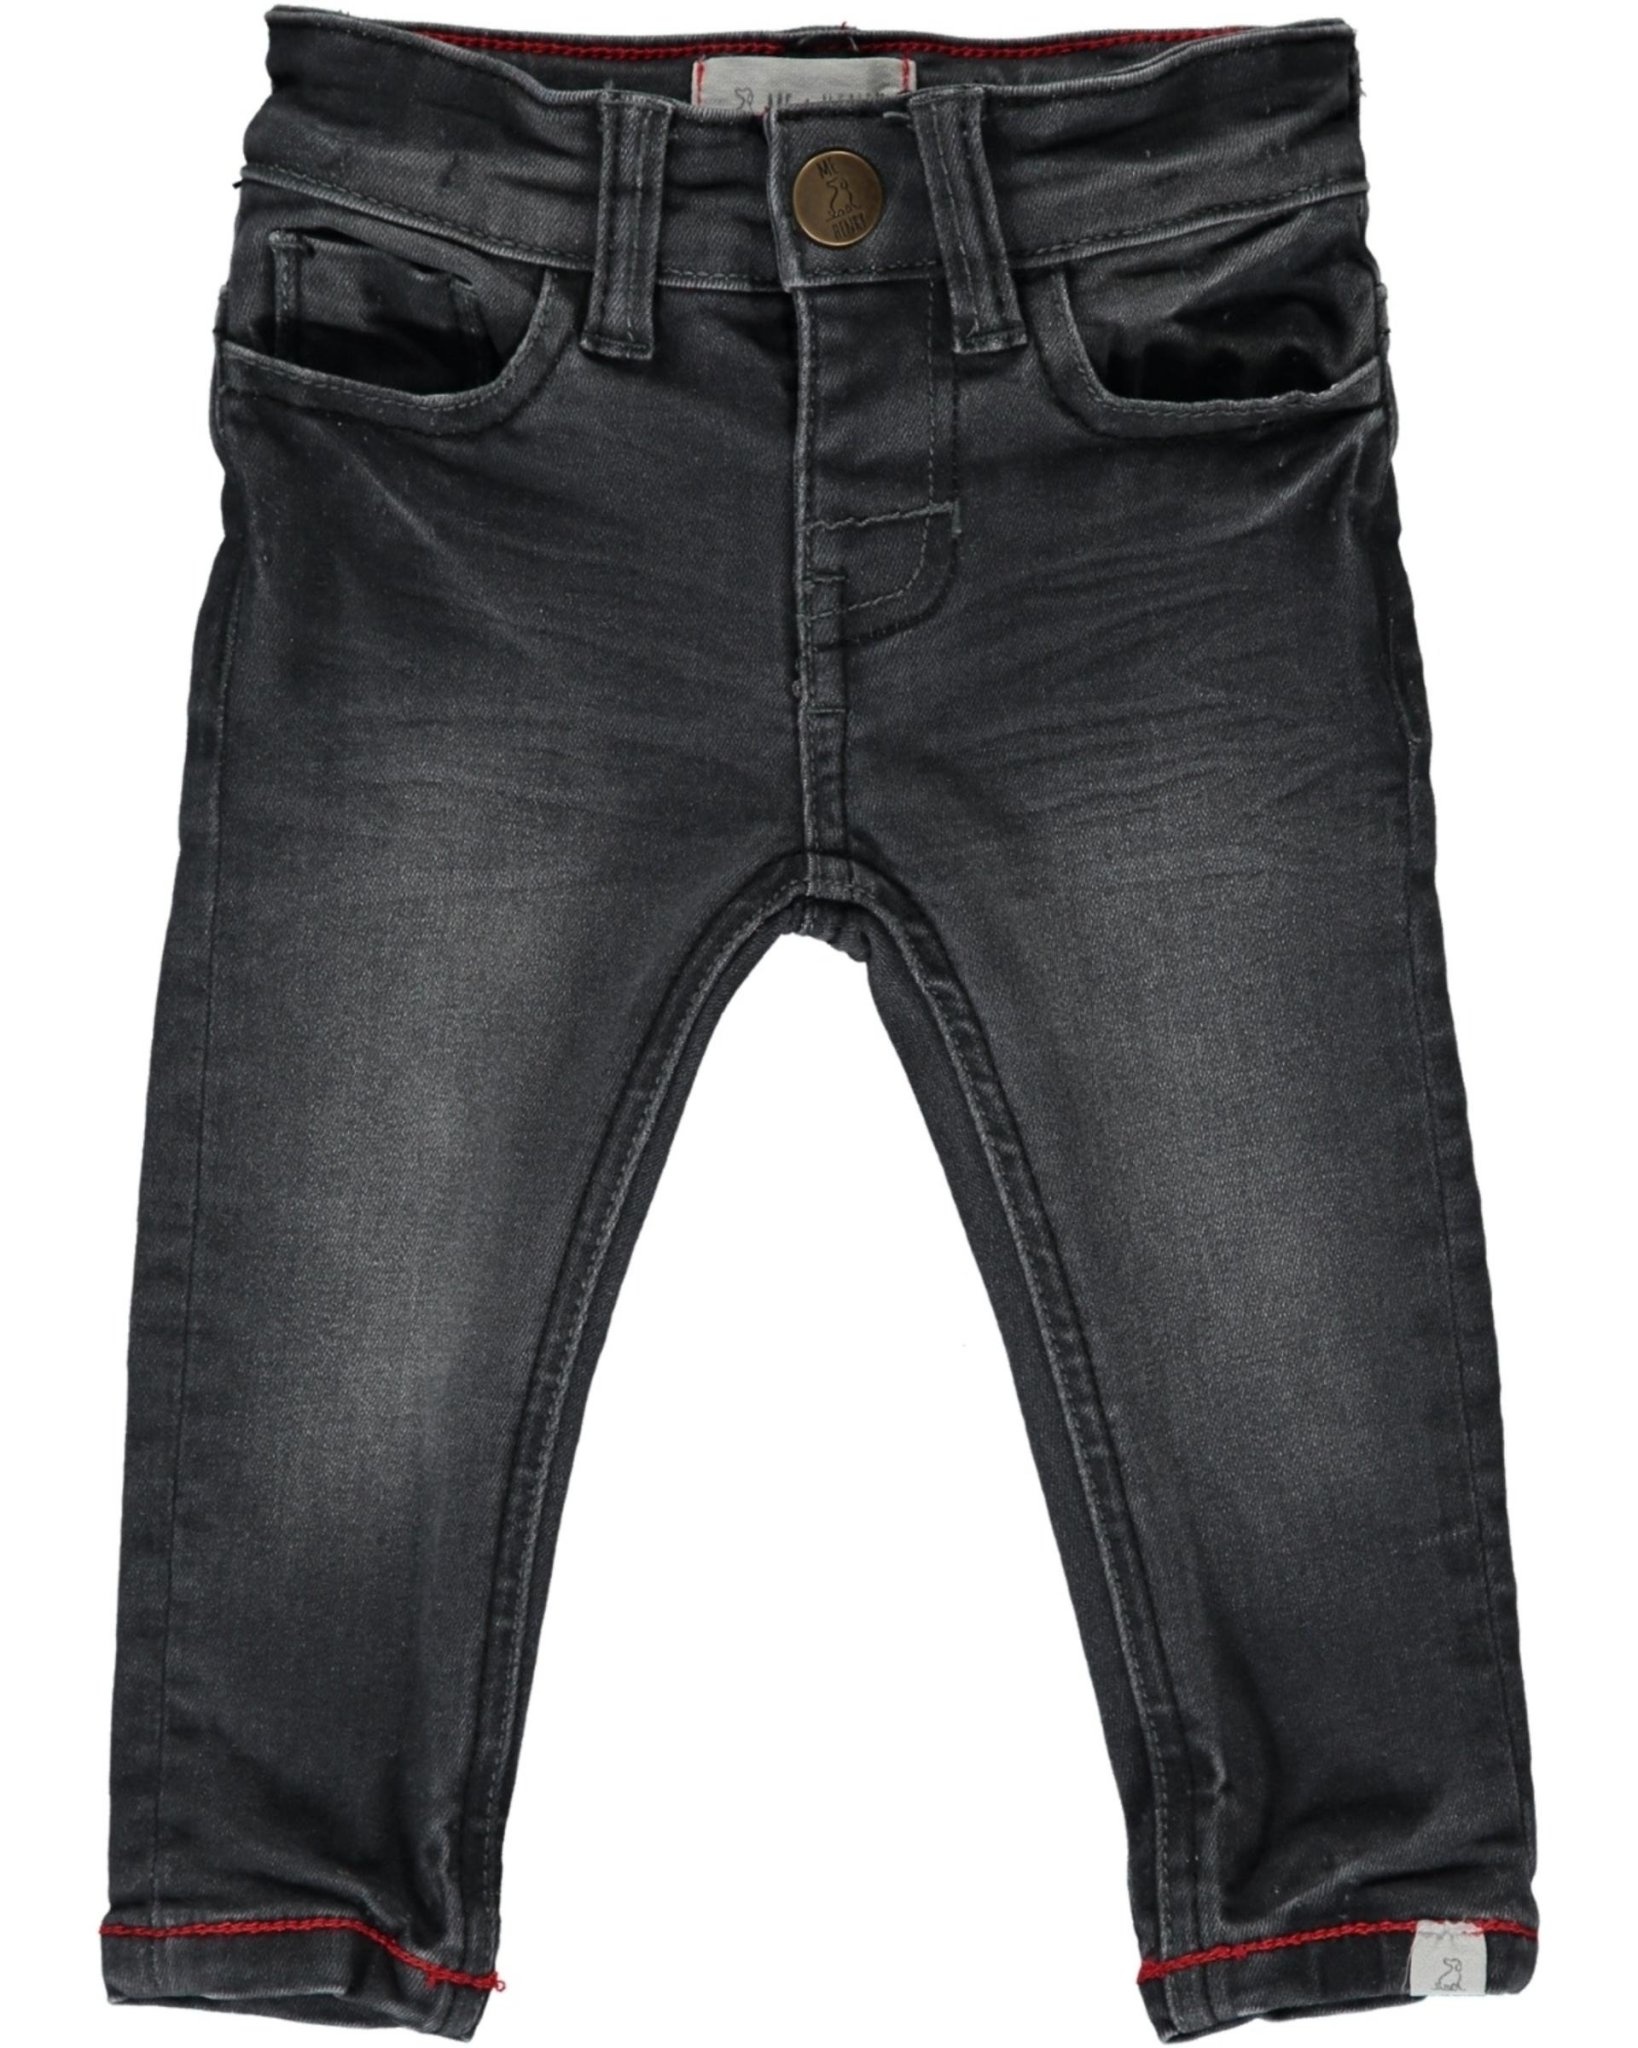 Buy Tom & Jack Boy's Kids Regular Fit Denim Jeans | Kids Wear Cotton  Fashion Denim Pant (Black 32) at Amazon.in